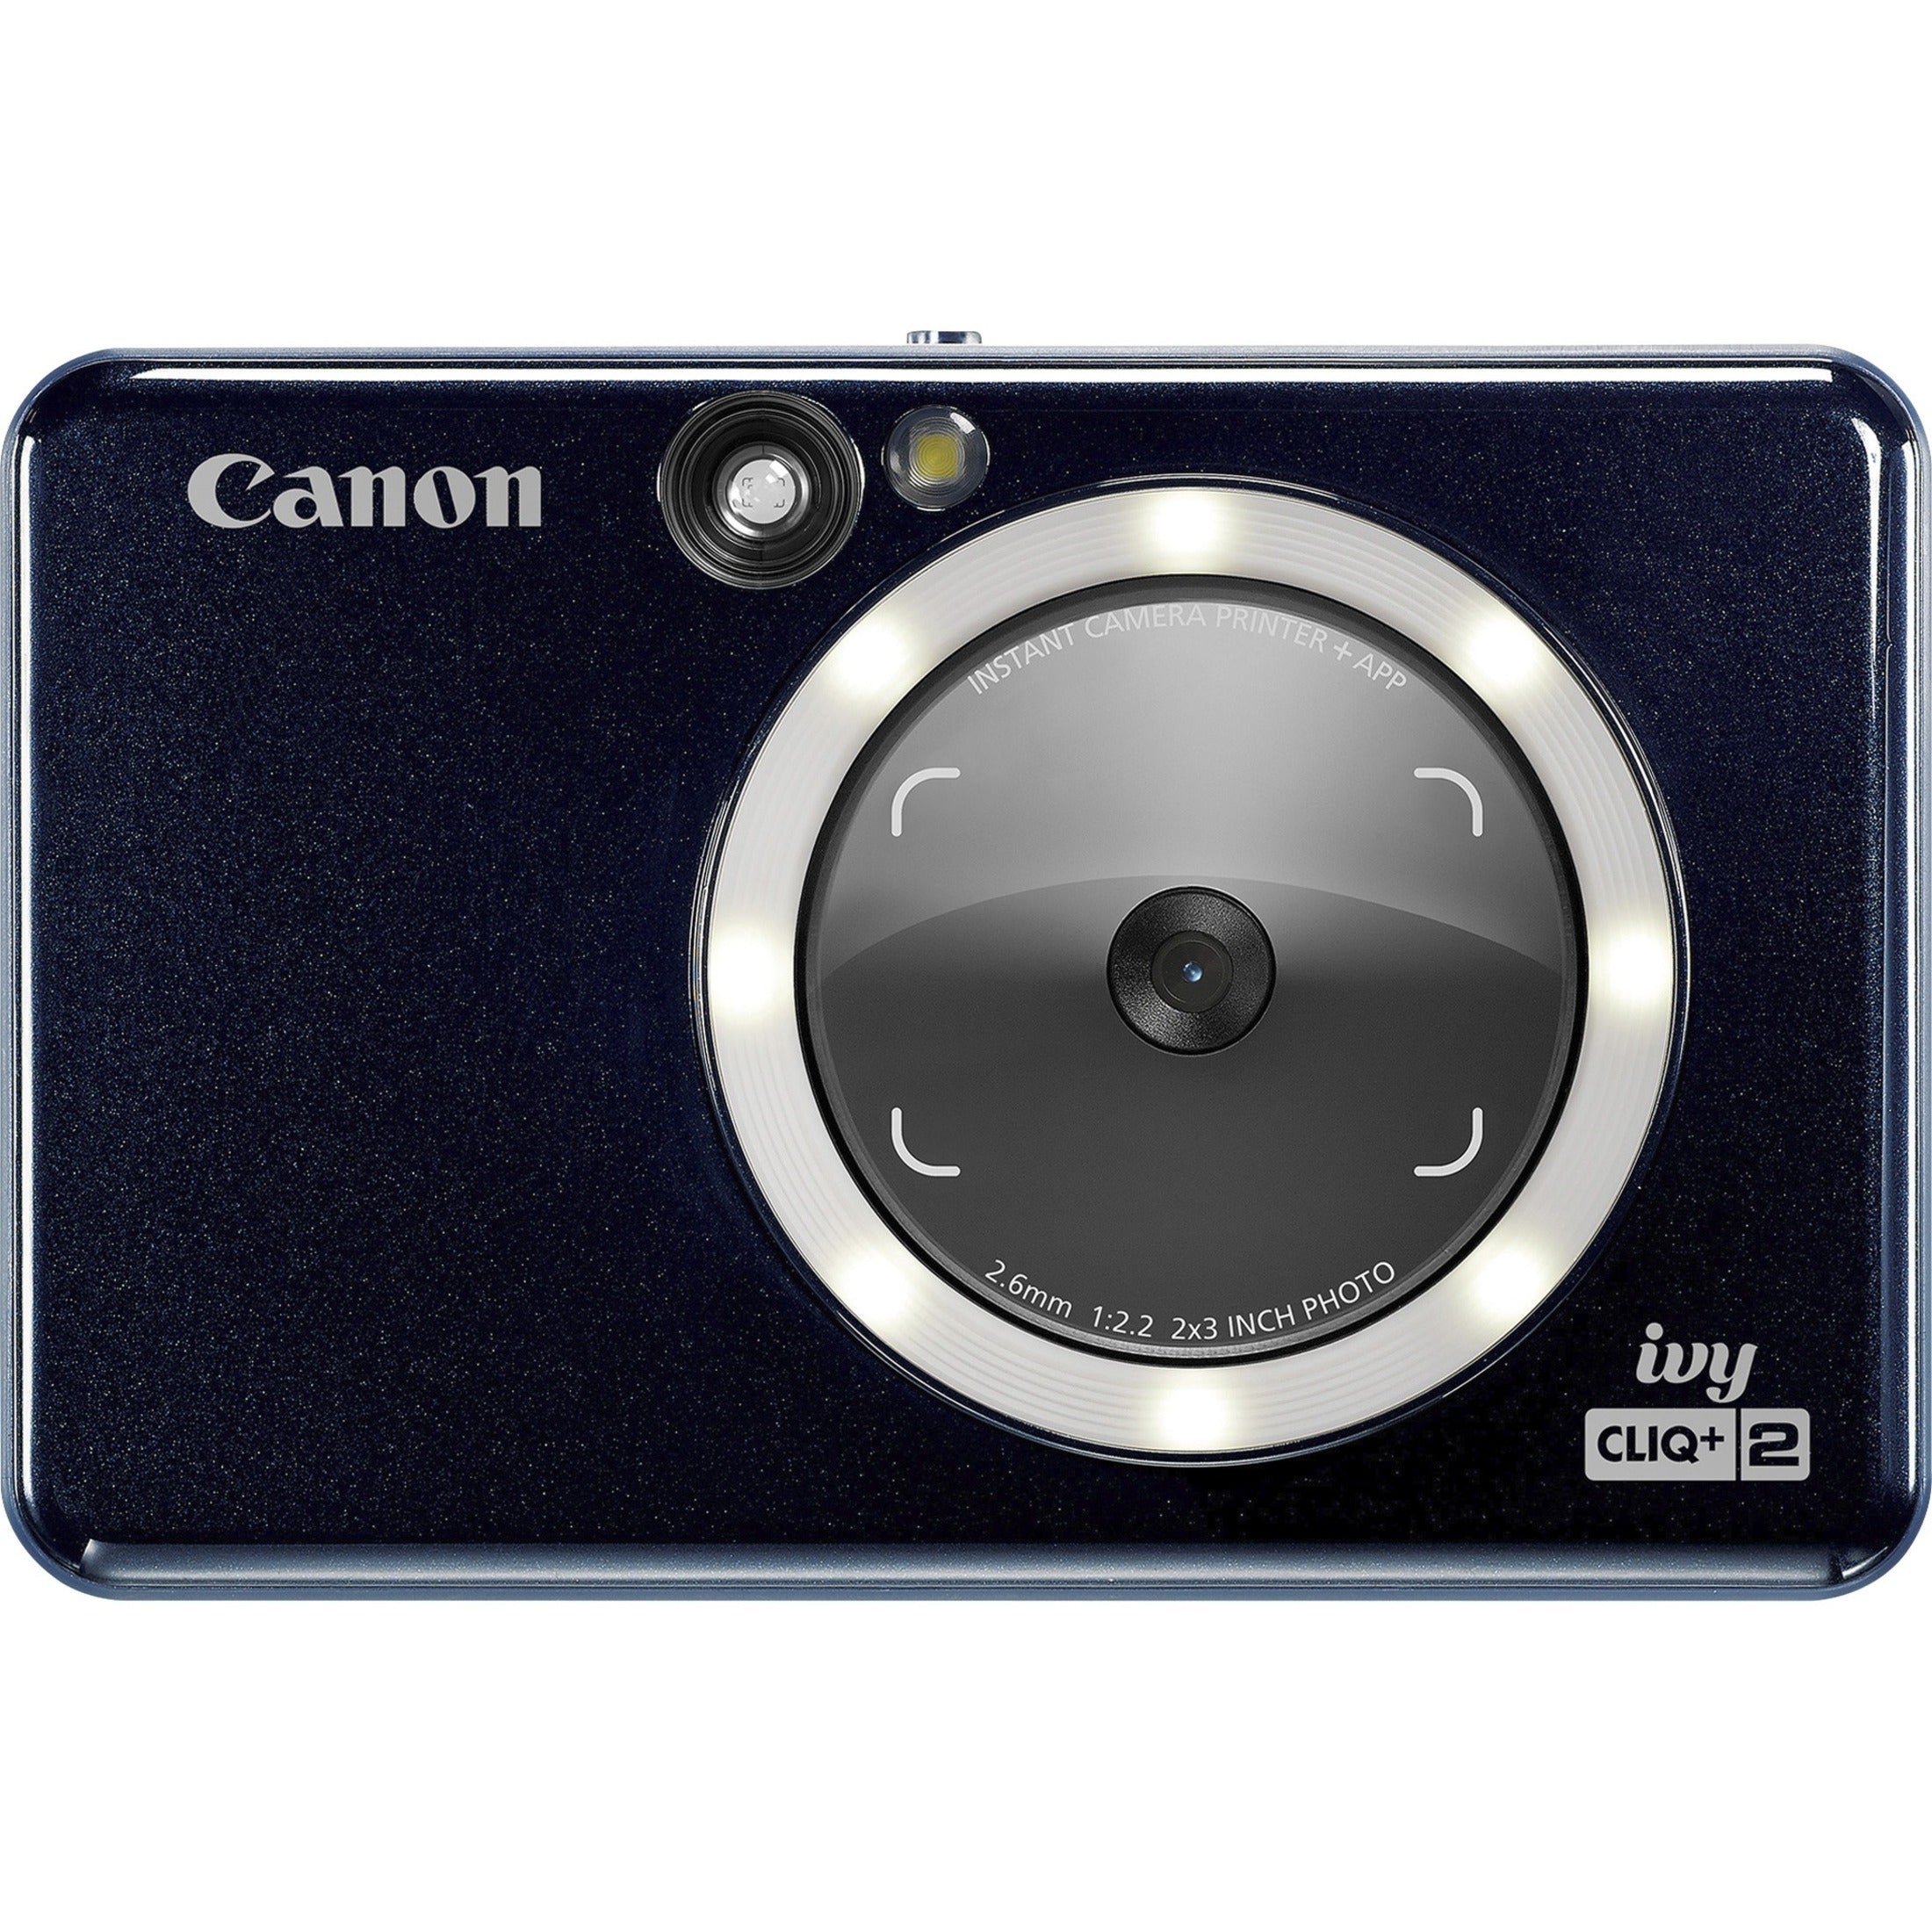 Canon 4519C005 IVY CLIQ+2 Instant Camera Printer + App, Midnight Navy